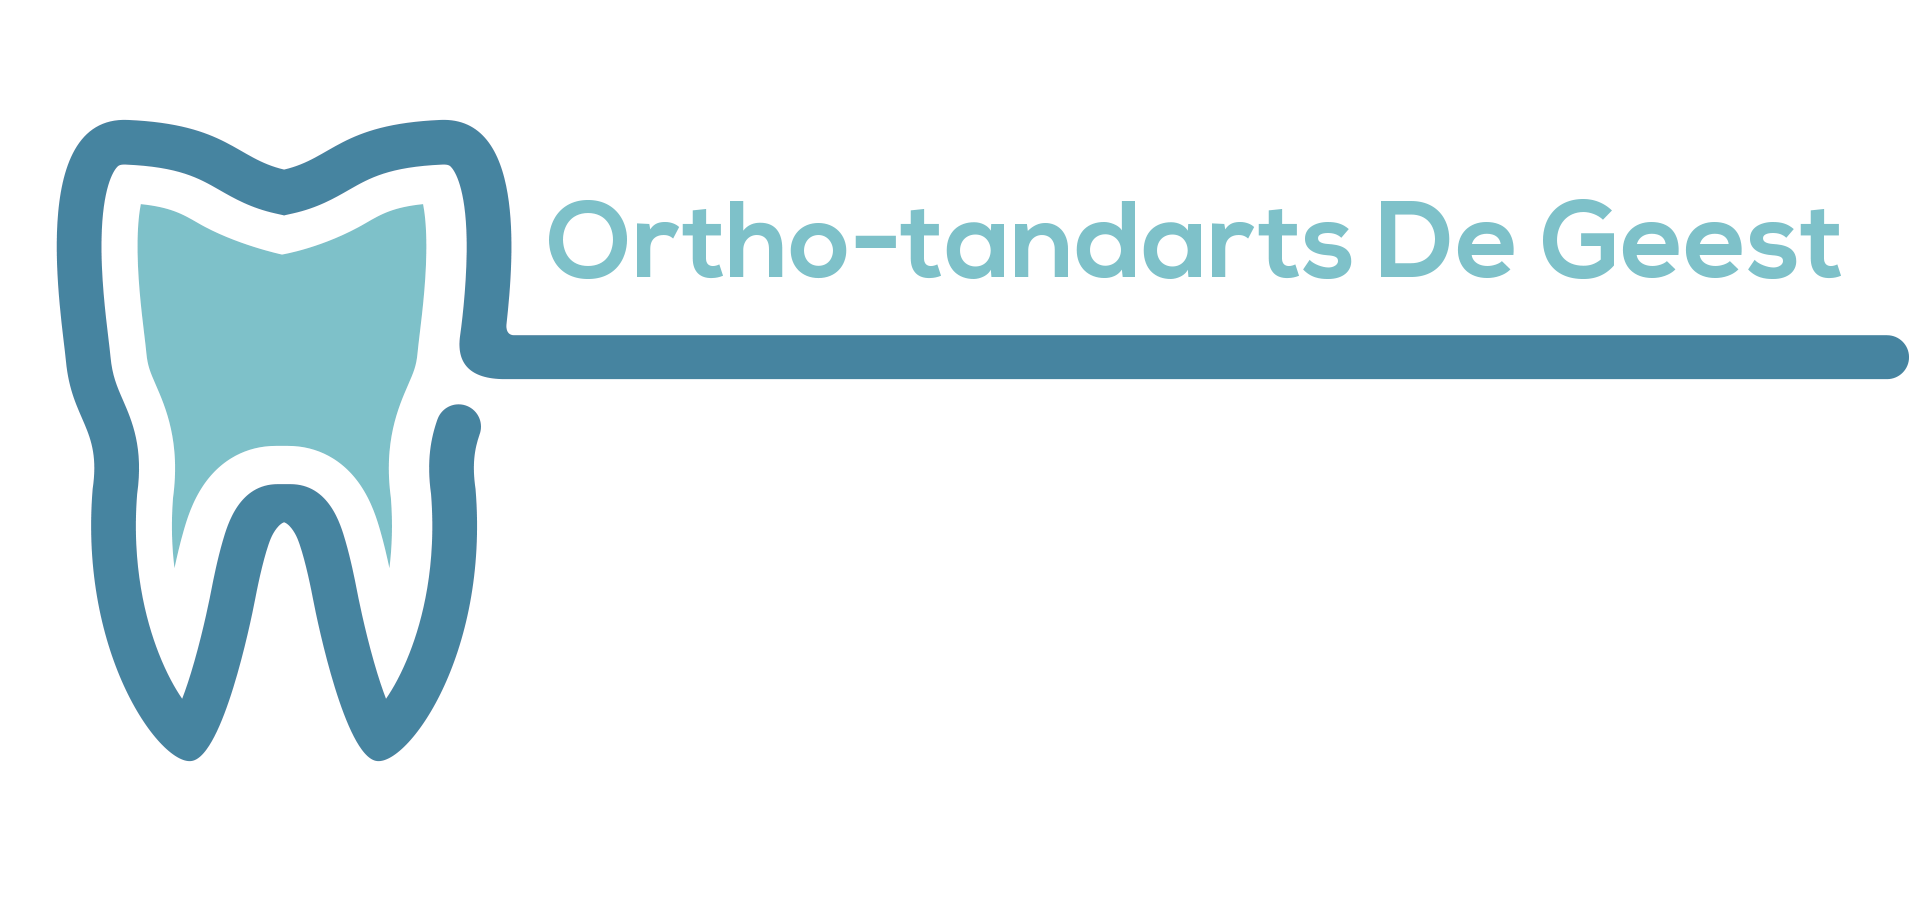 Ortho-tandarts De Geest